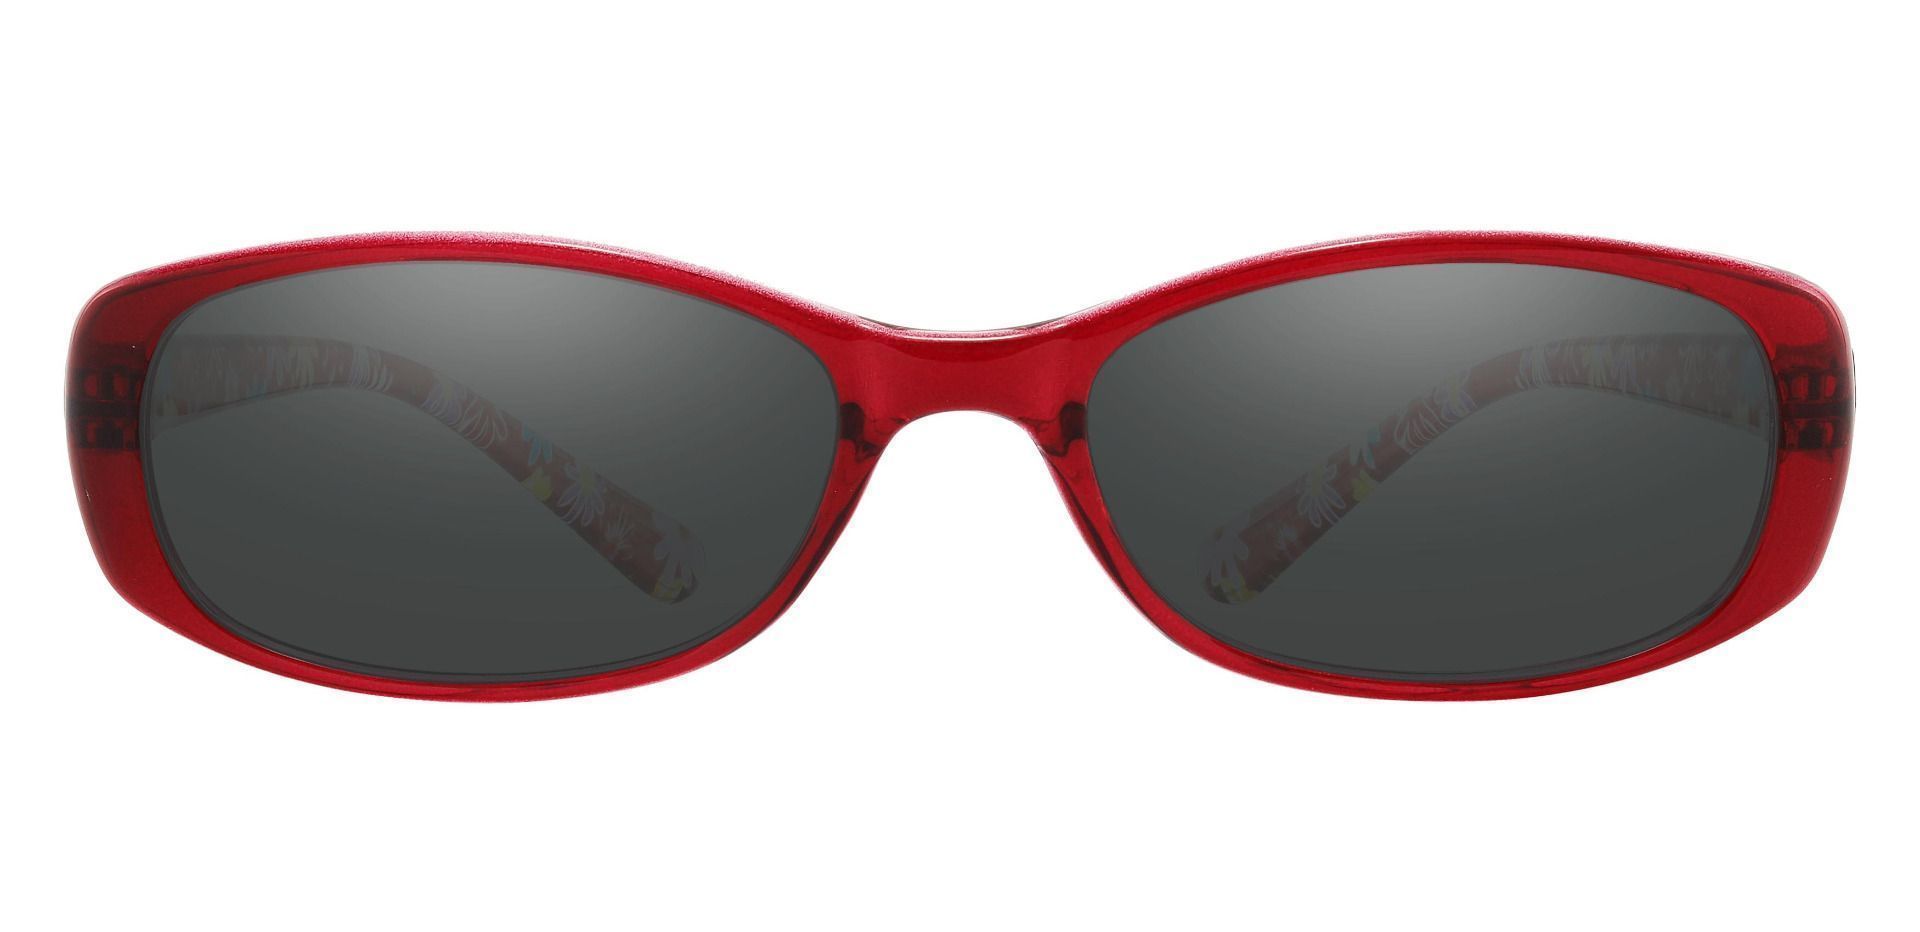 Bethesda Rectangle Progressive Sunglasses - Red Frame With Gray Lenses